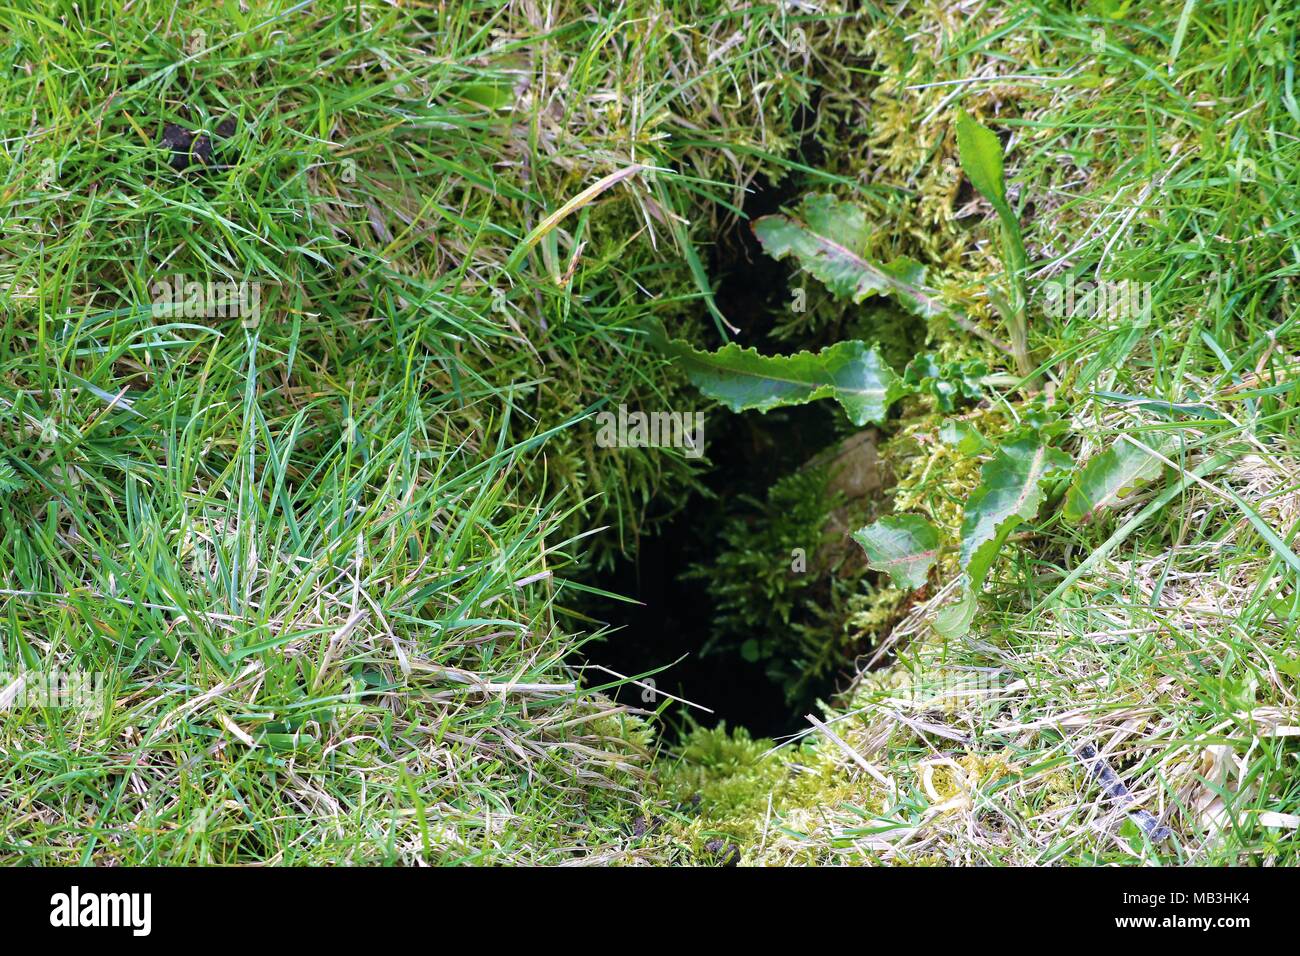 Rabbit hole in green grass Stock Photo